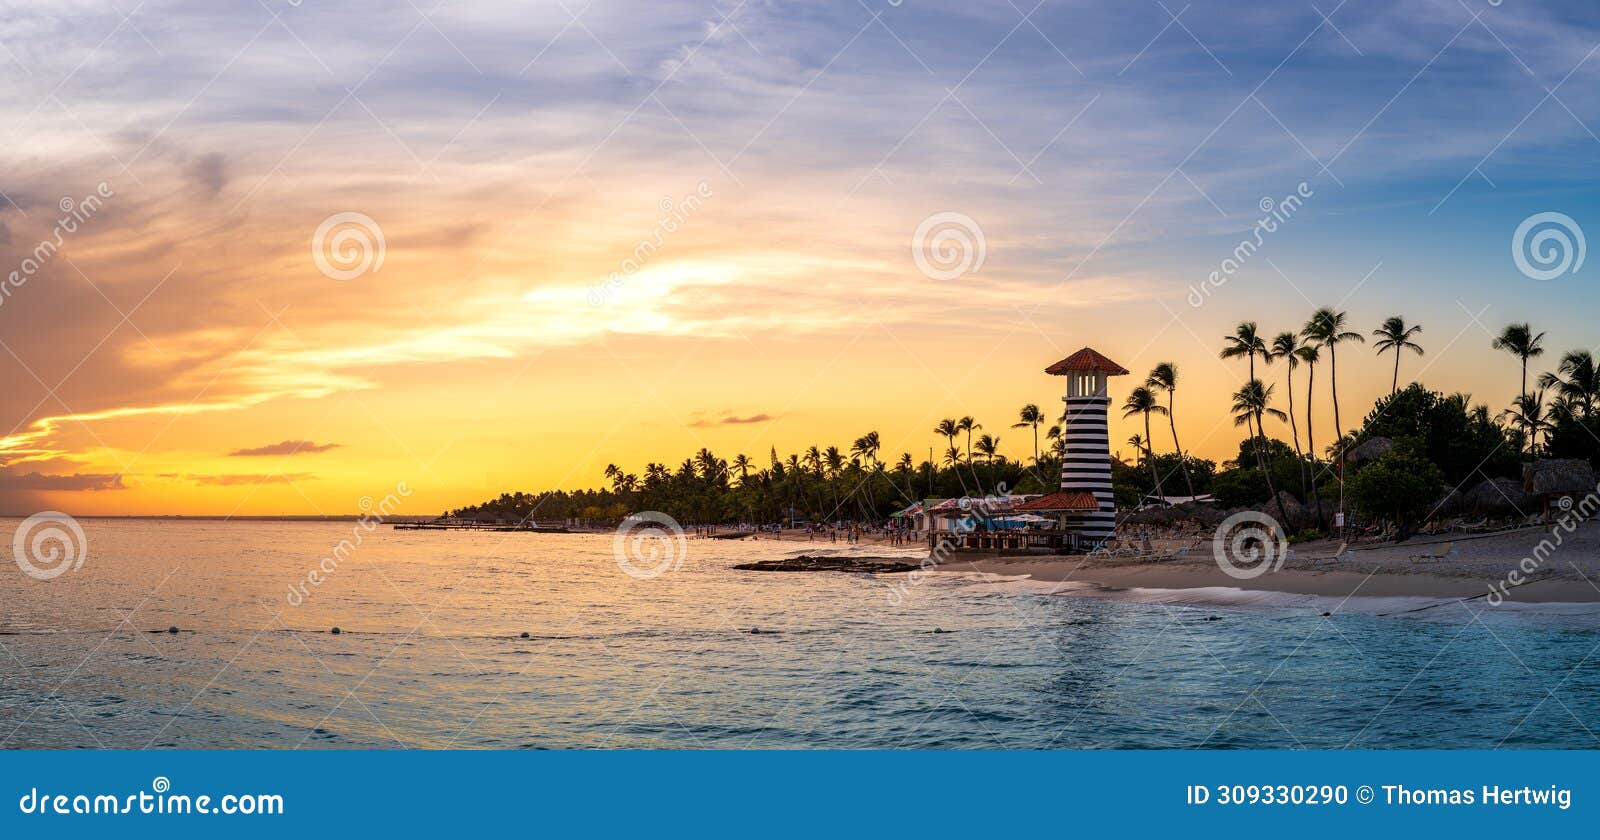 panorama of dramatic sunset at bayahibe beach, la romana, dominican republic